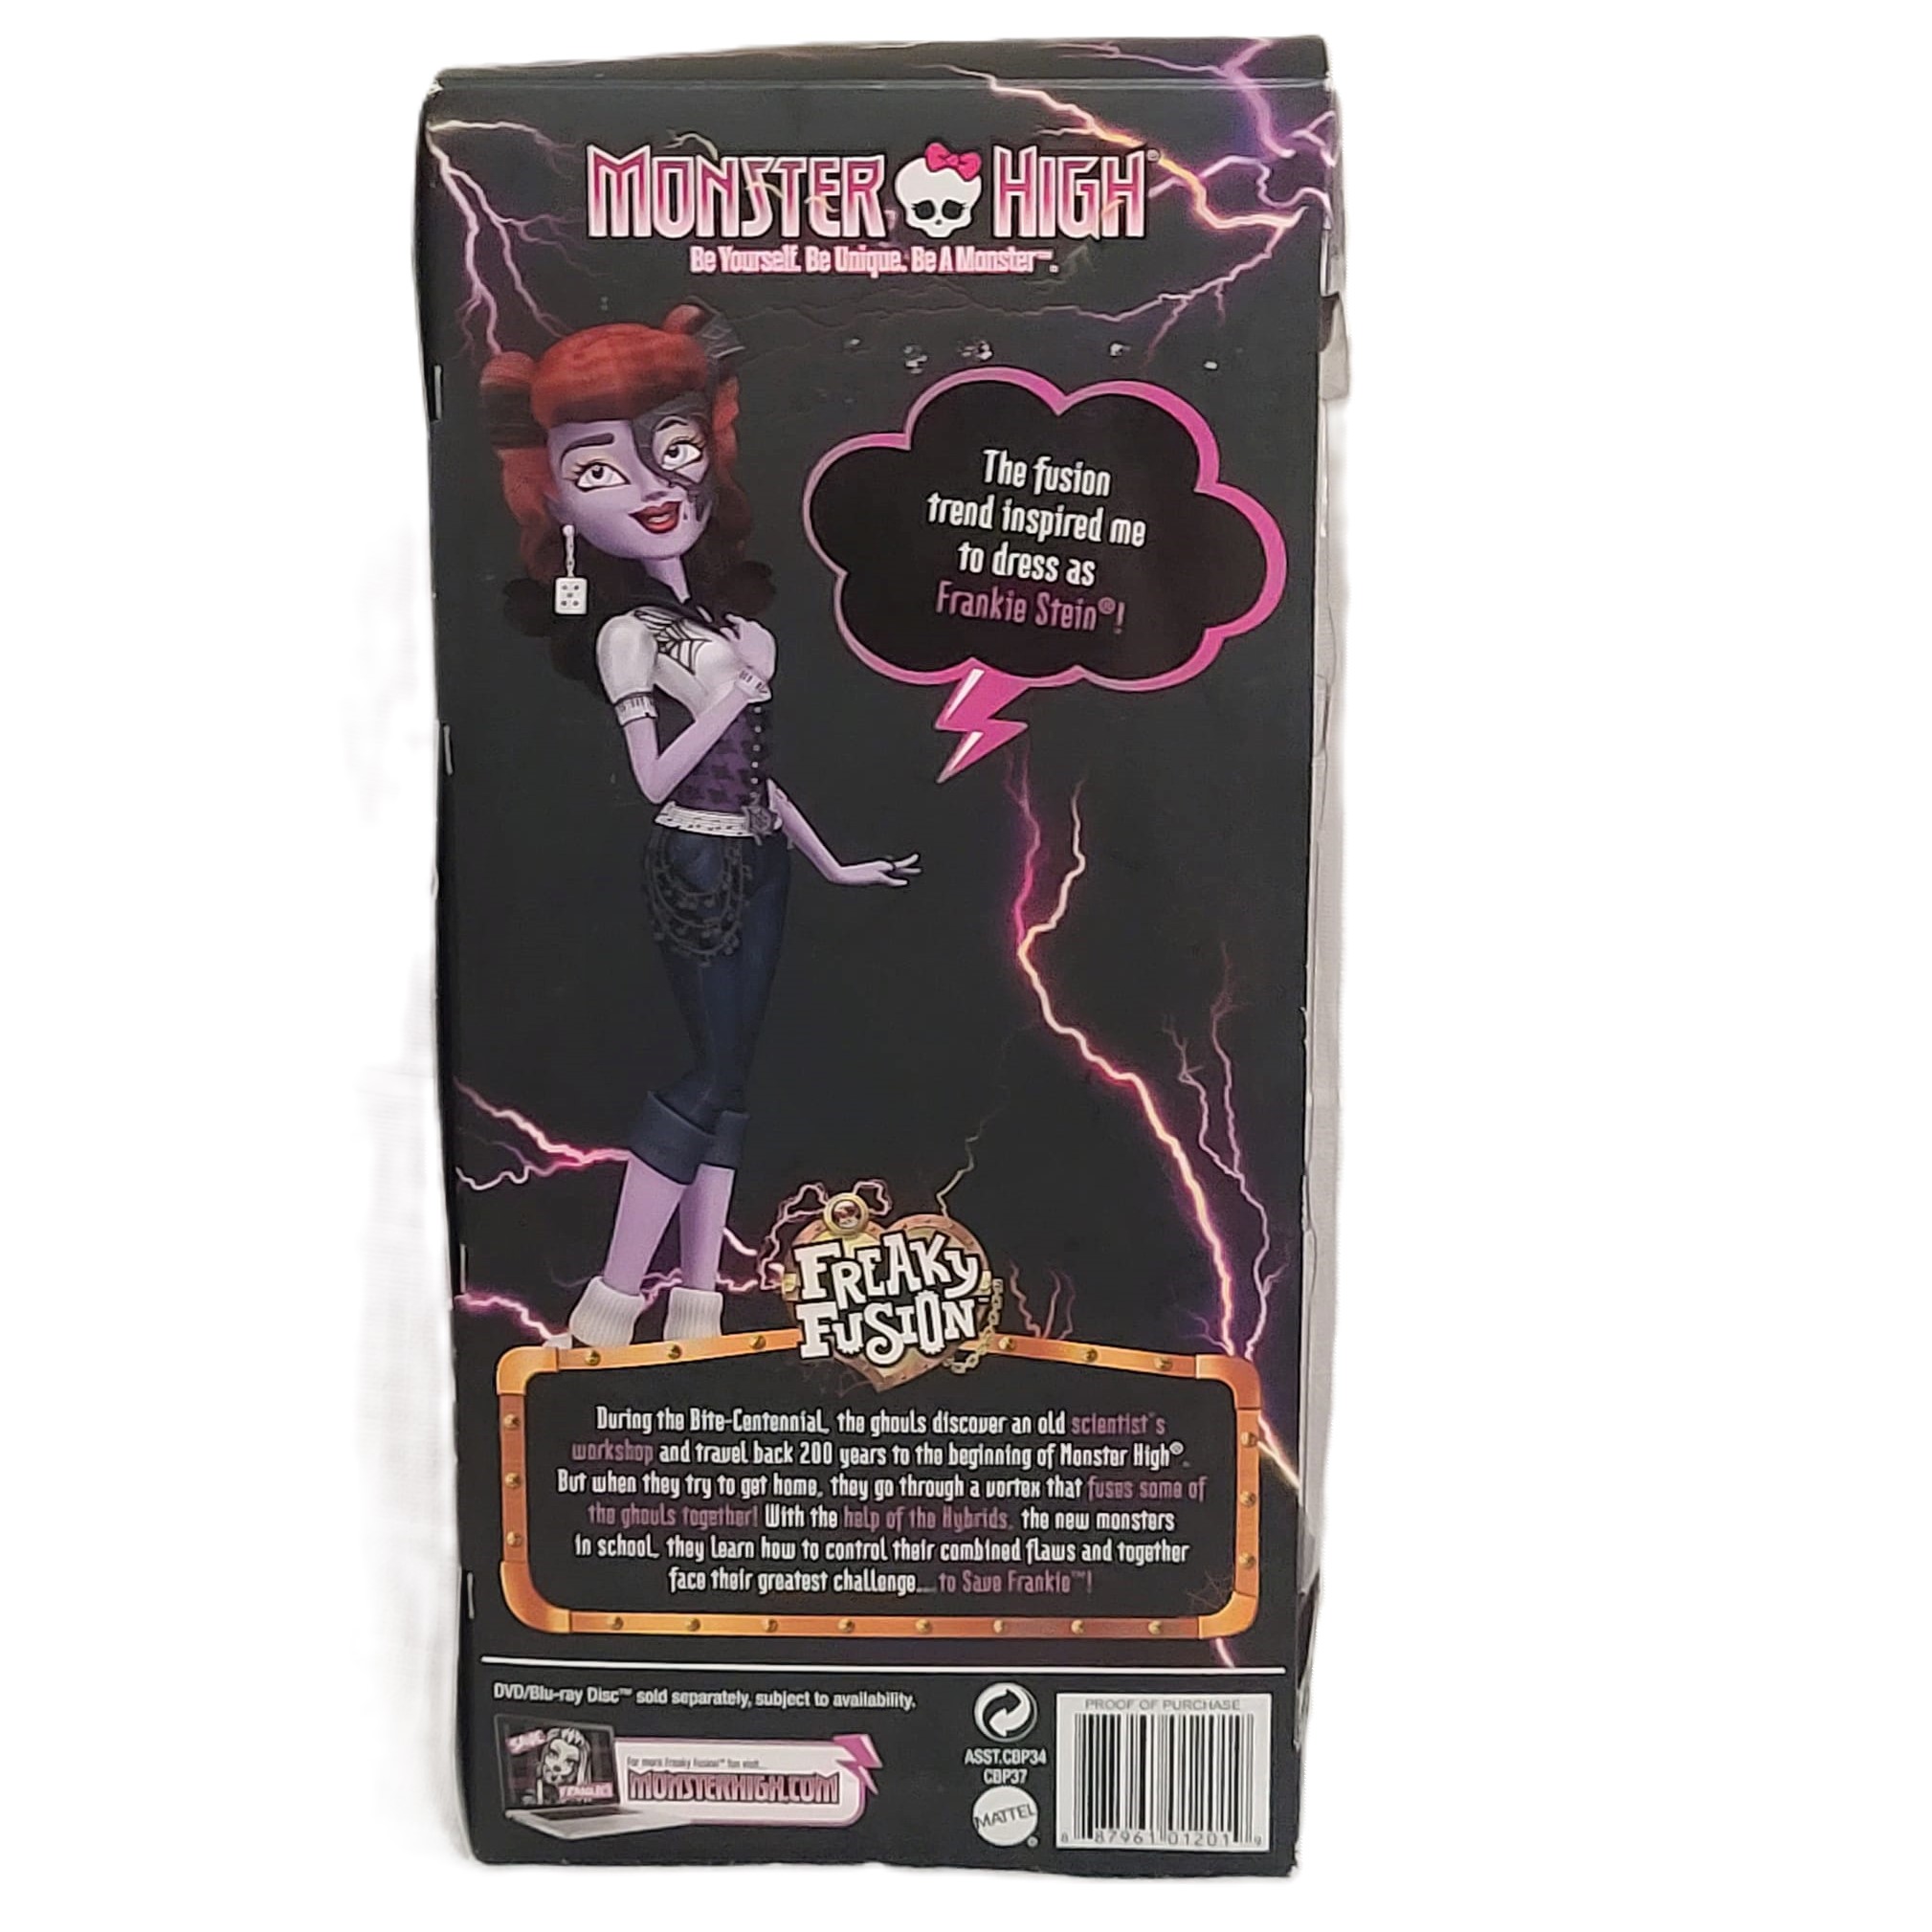 Mattel Monster High Freaky Fusion Operatta Doll 2013